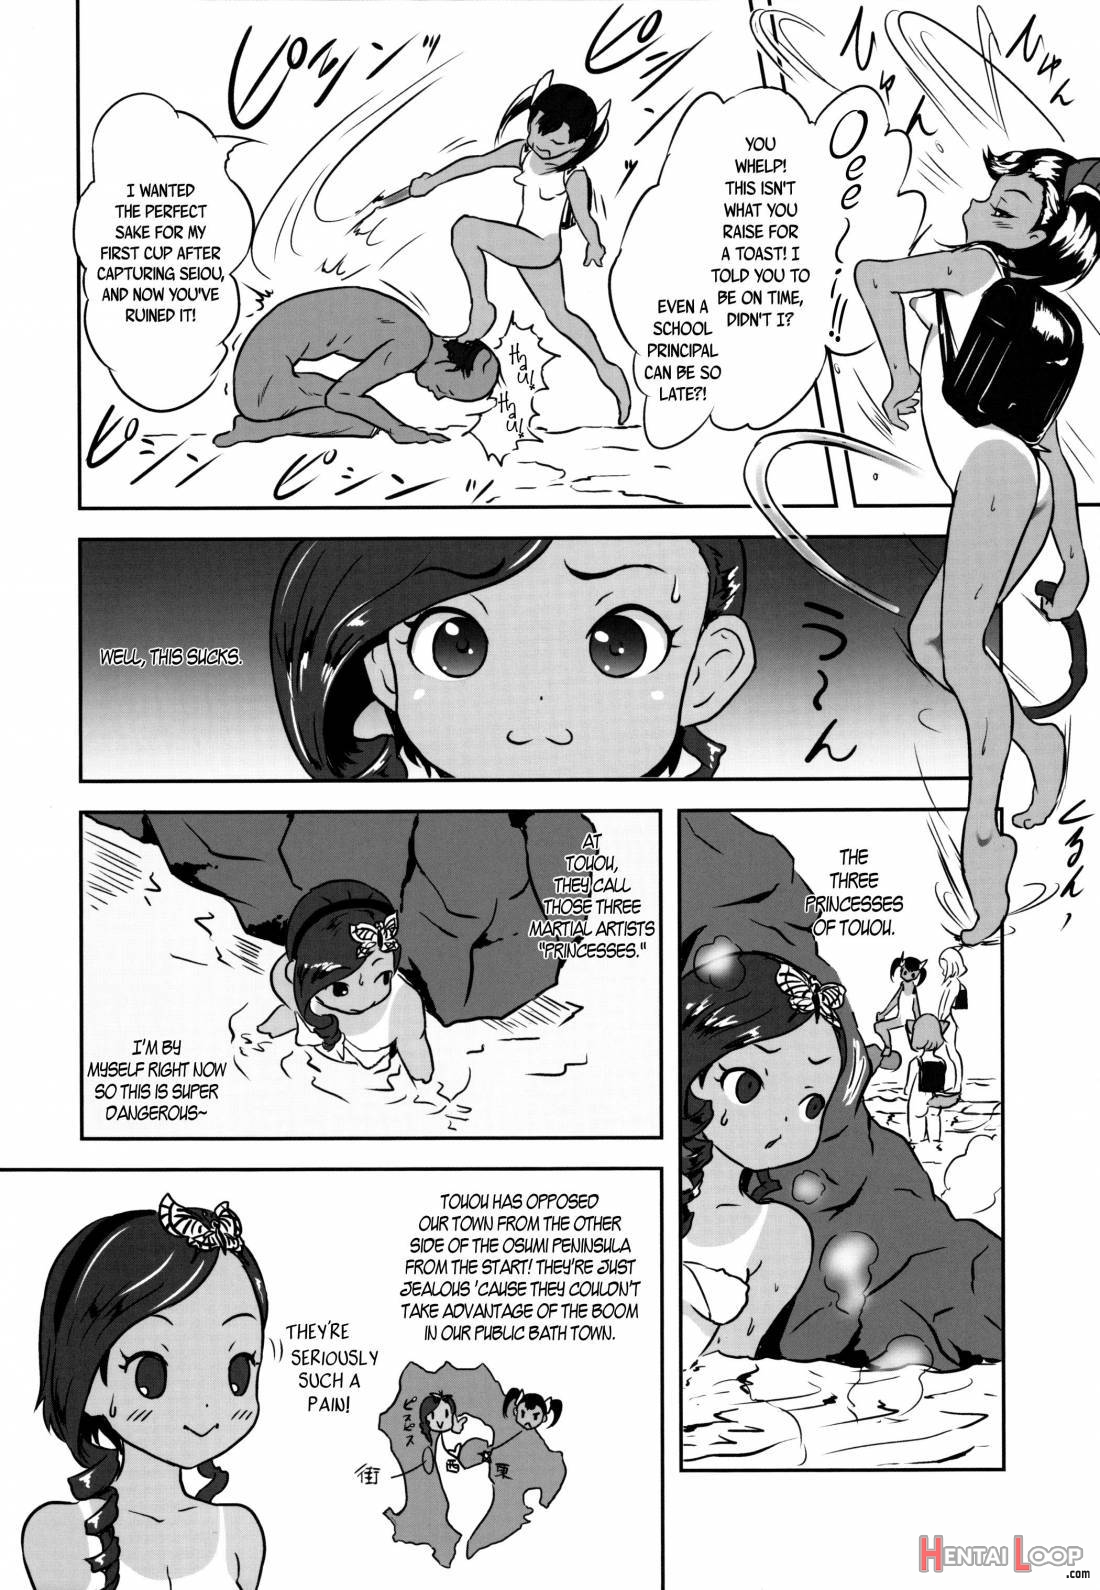 Yurori Kyouiku San page 5